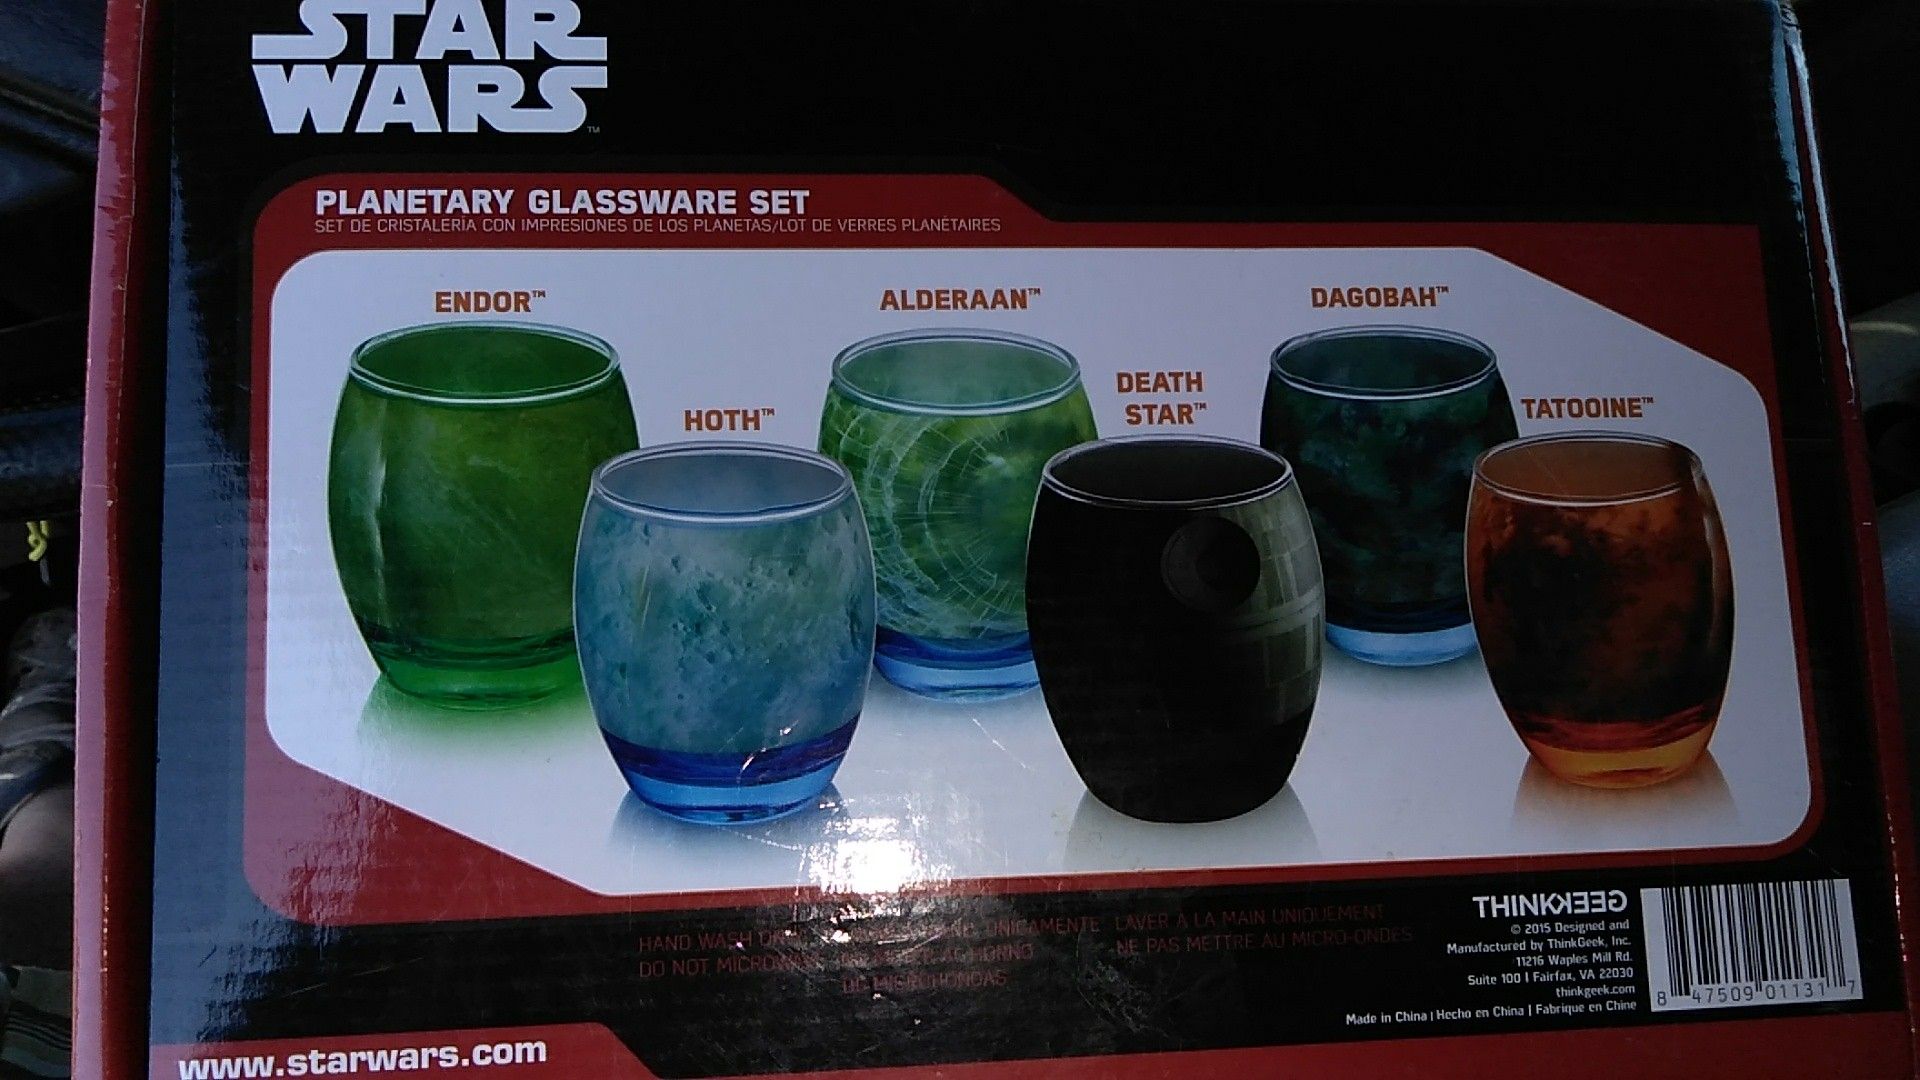 Star wars glasses made by Disney - BRAND NEW!